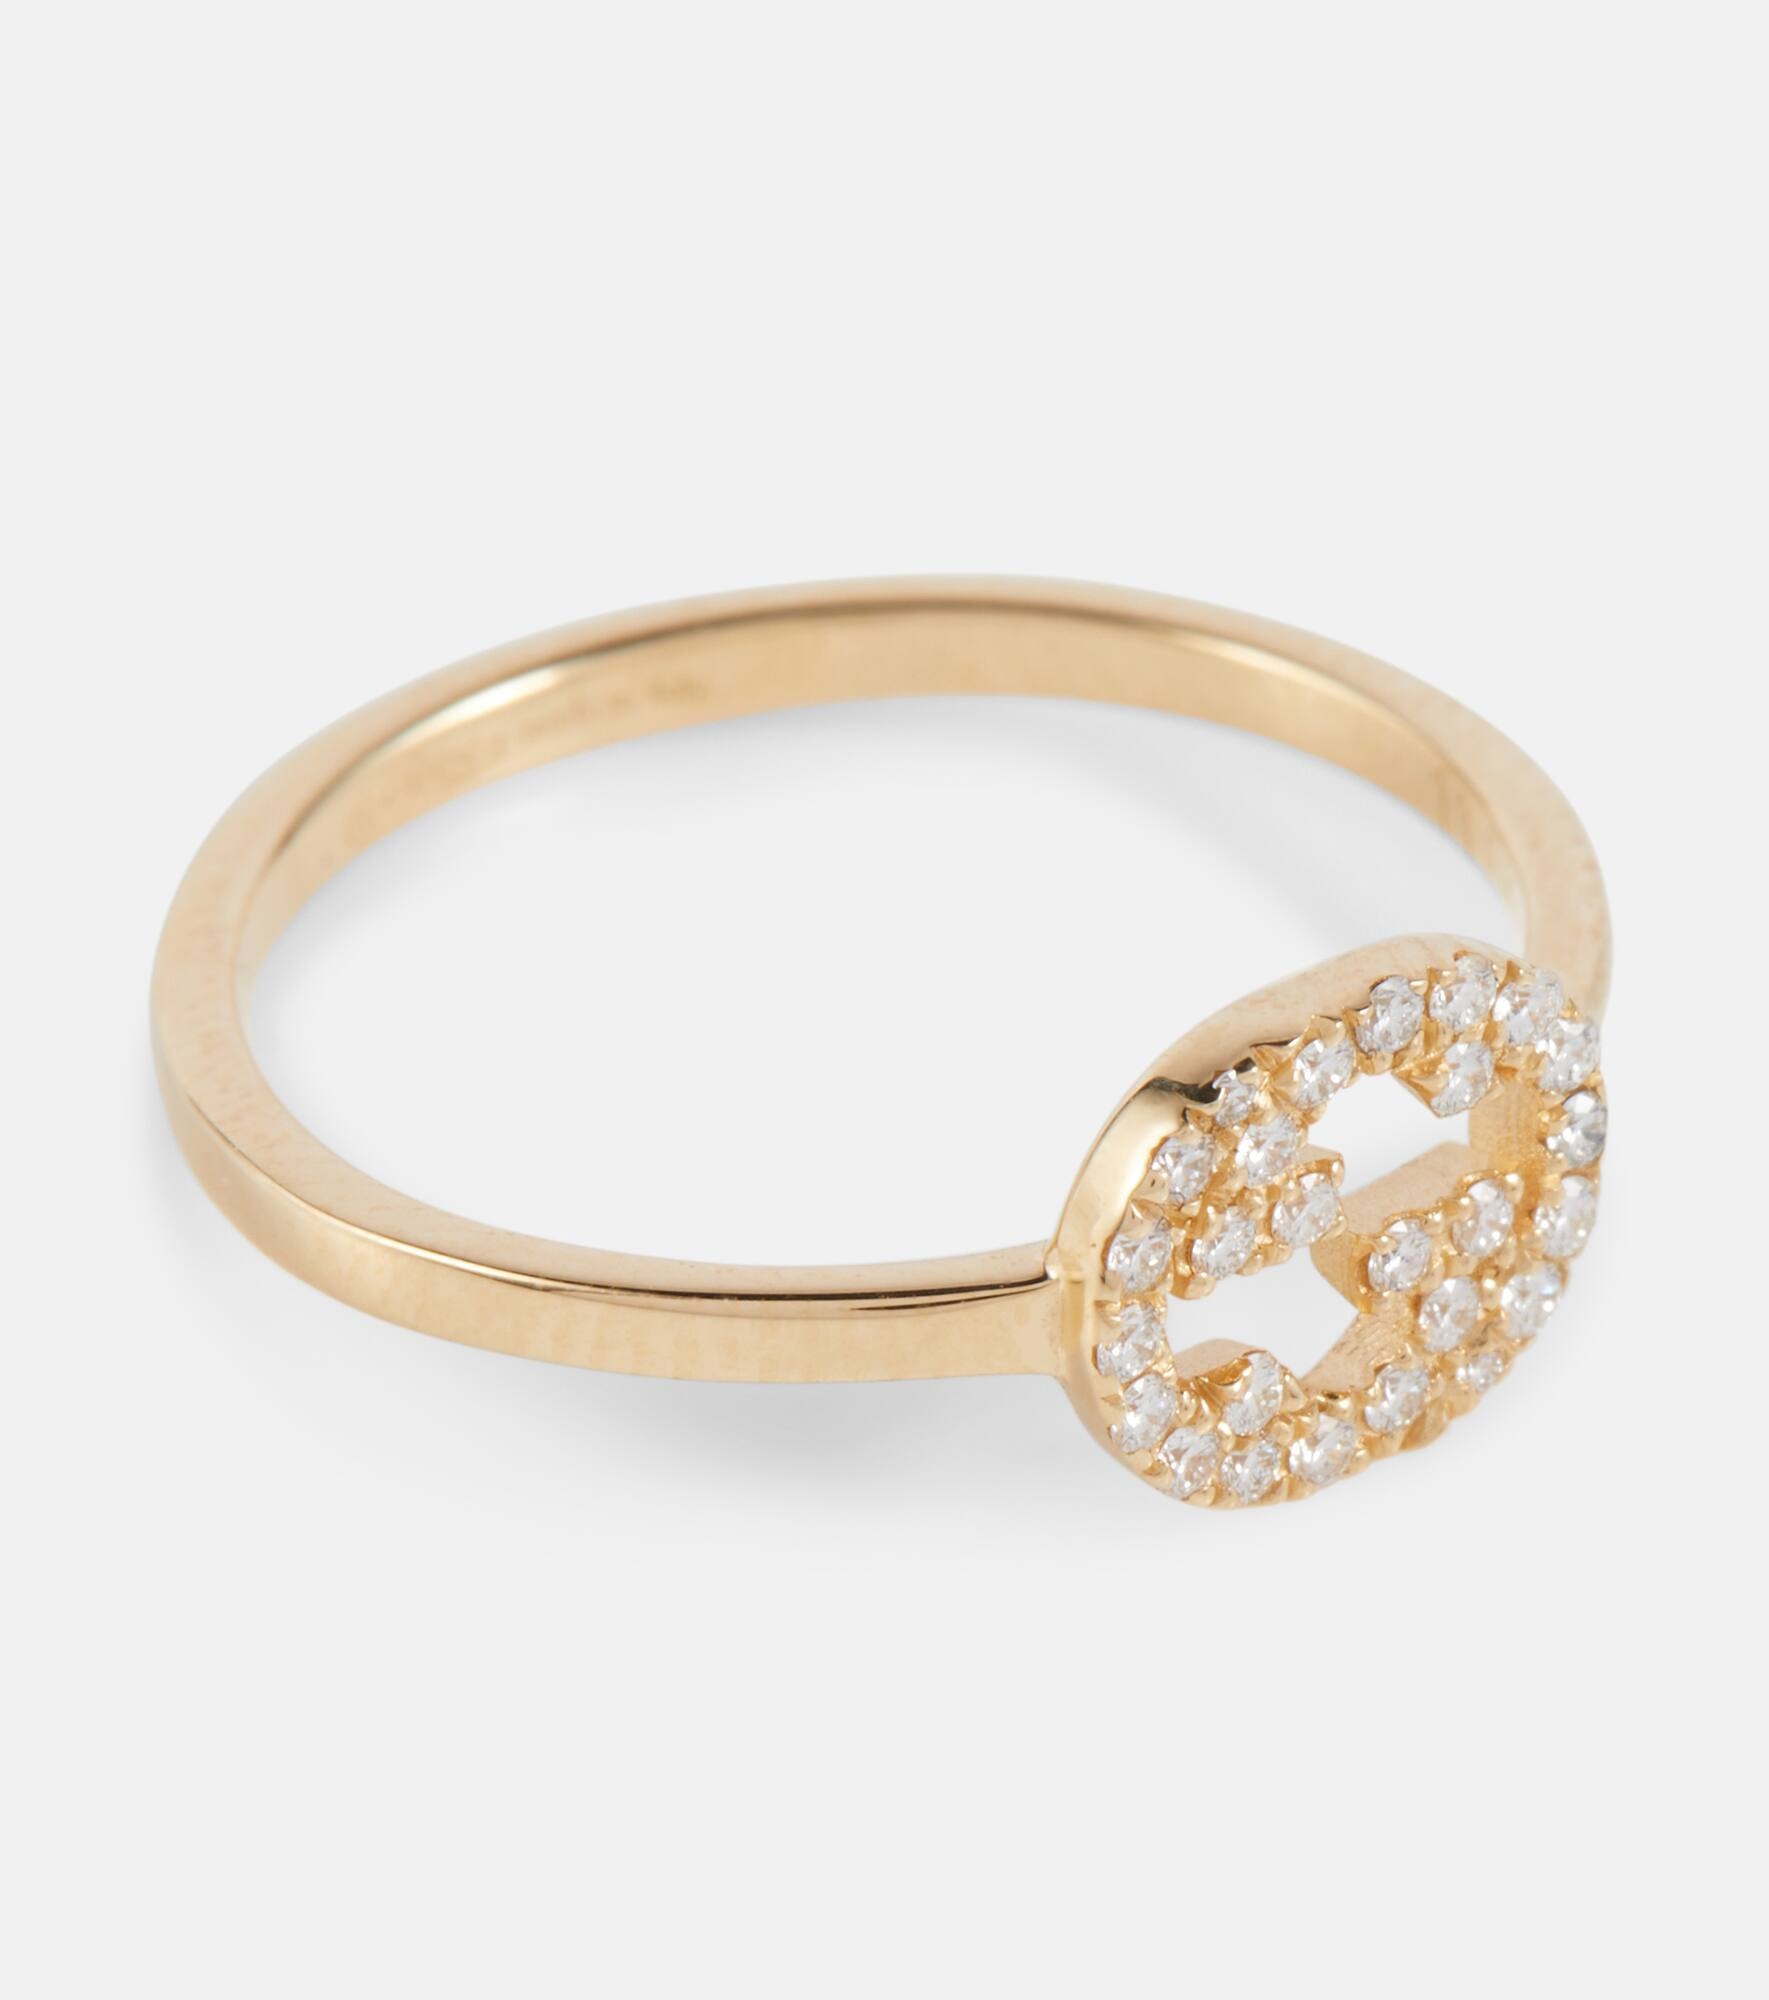 Interlocking G 18kt gold ring with diamonds - 3